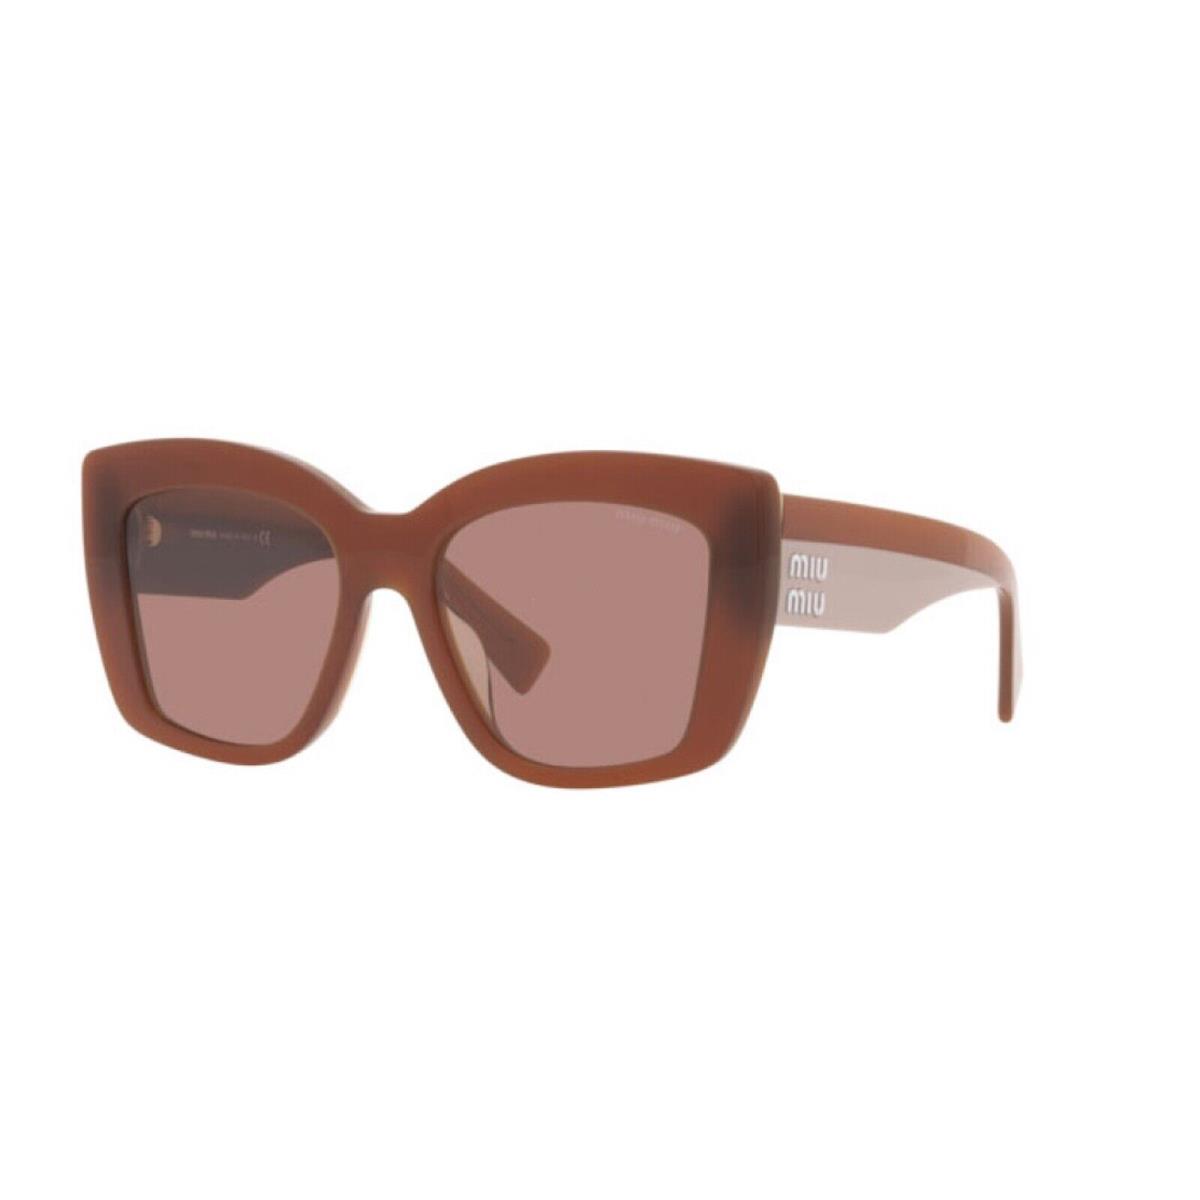 Womens Miu Miu MU 04WS Square Sunglasses - Bordeaux Opal/light Brown 53mm